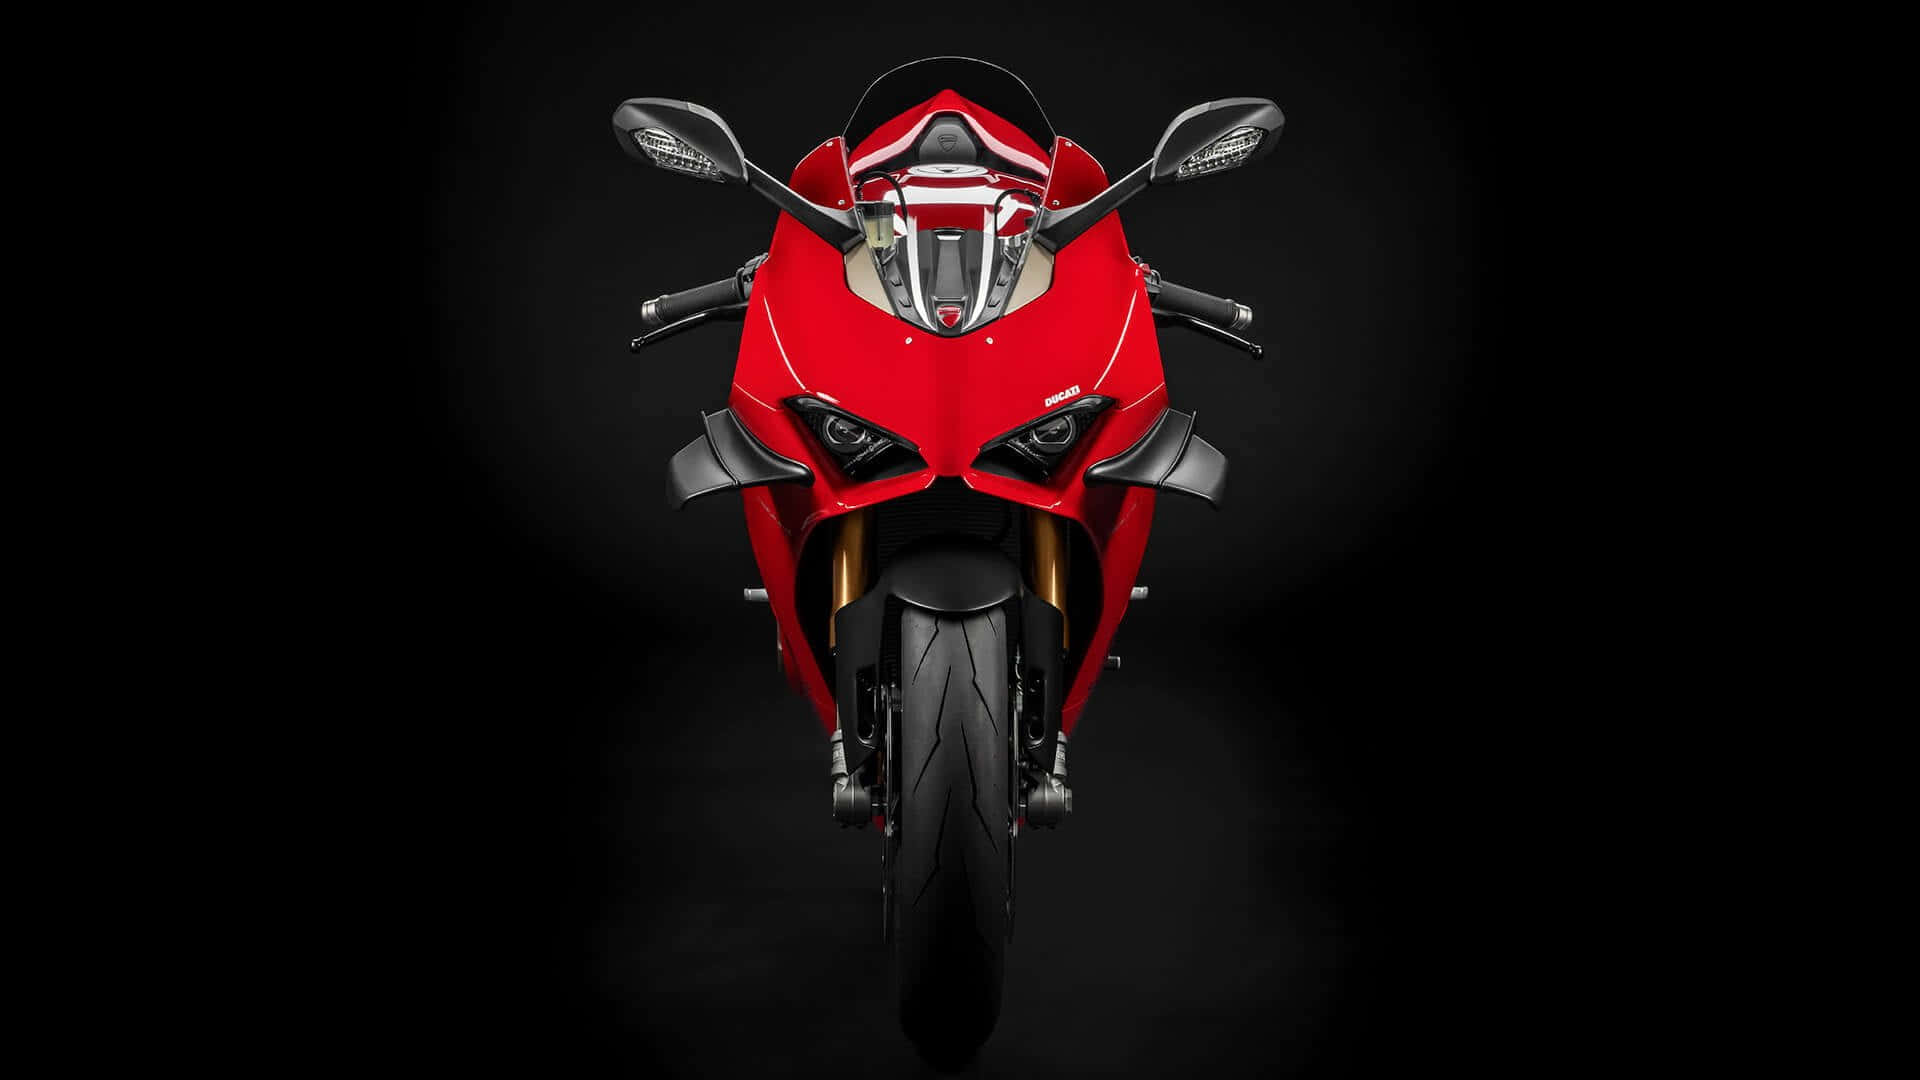 Astonishing Ducati 1199 Bike Background